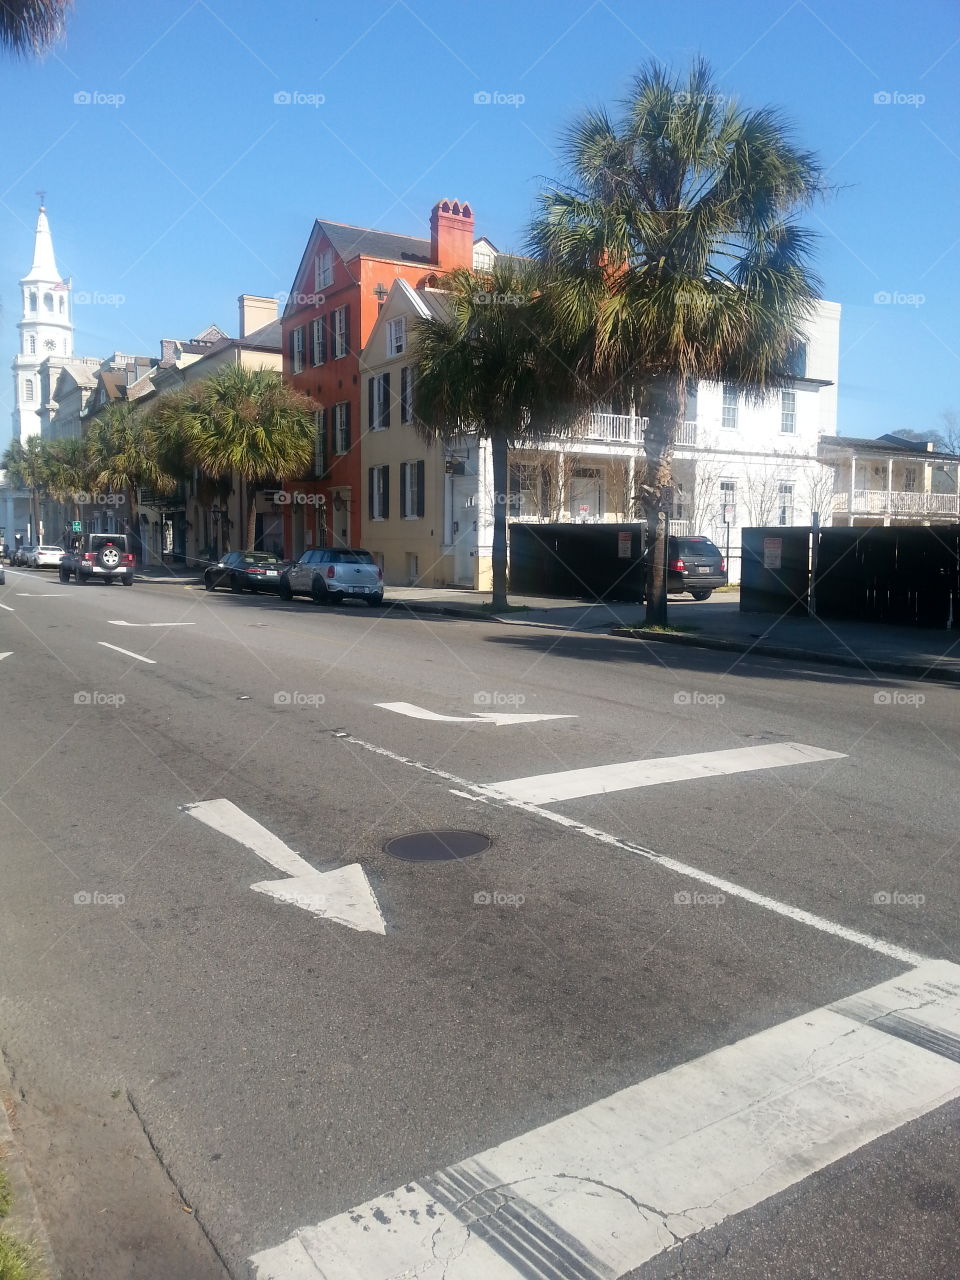 Downtown Charleston. My best friend lives in Charleston, South Carolina, so I visit often. 